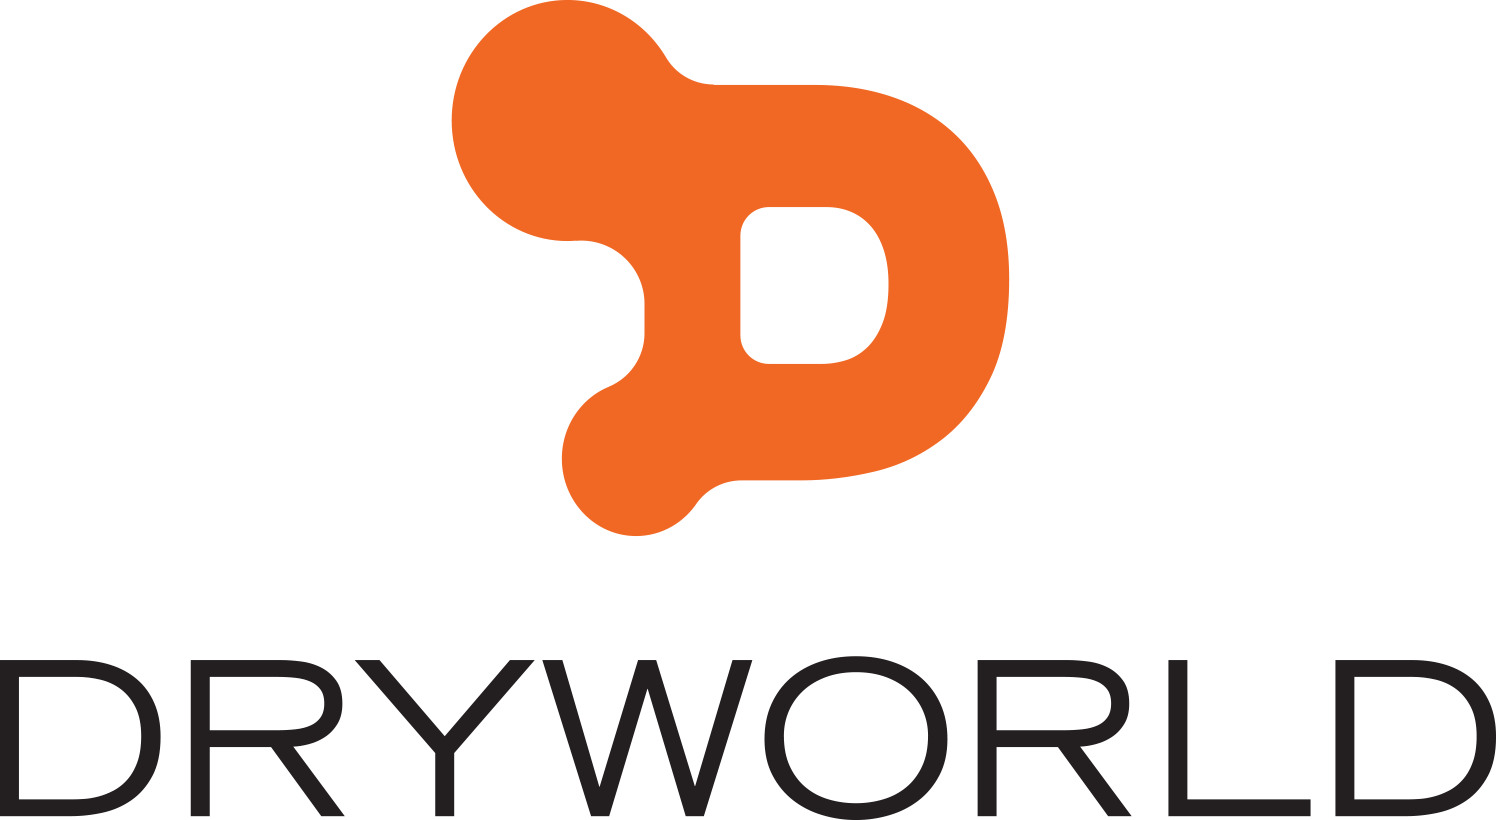 DRYWORLD logo.